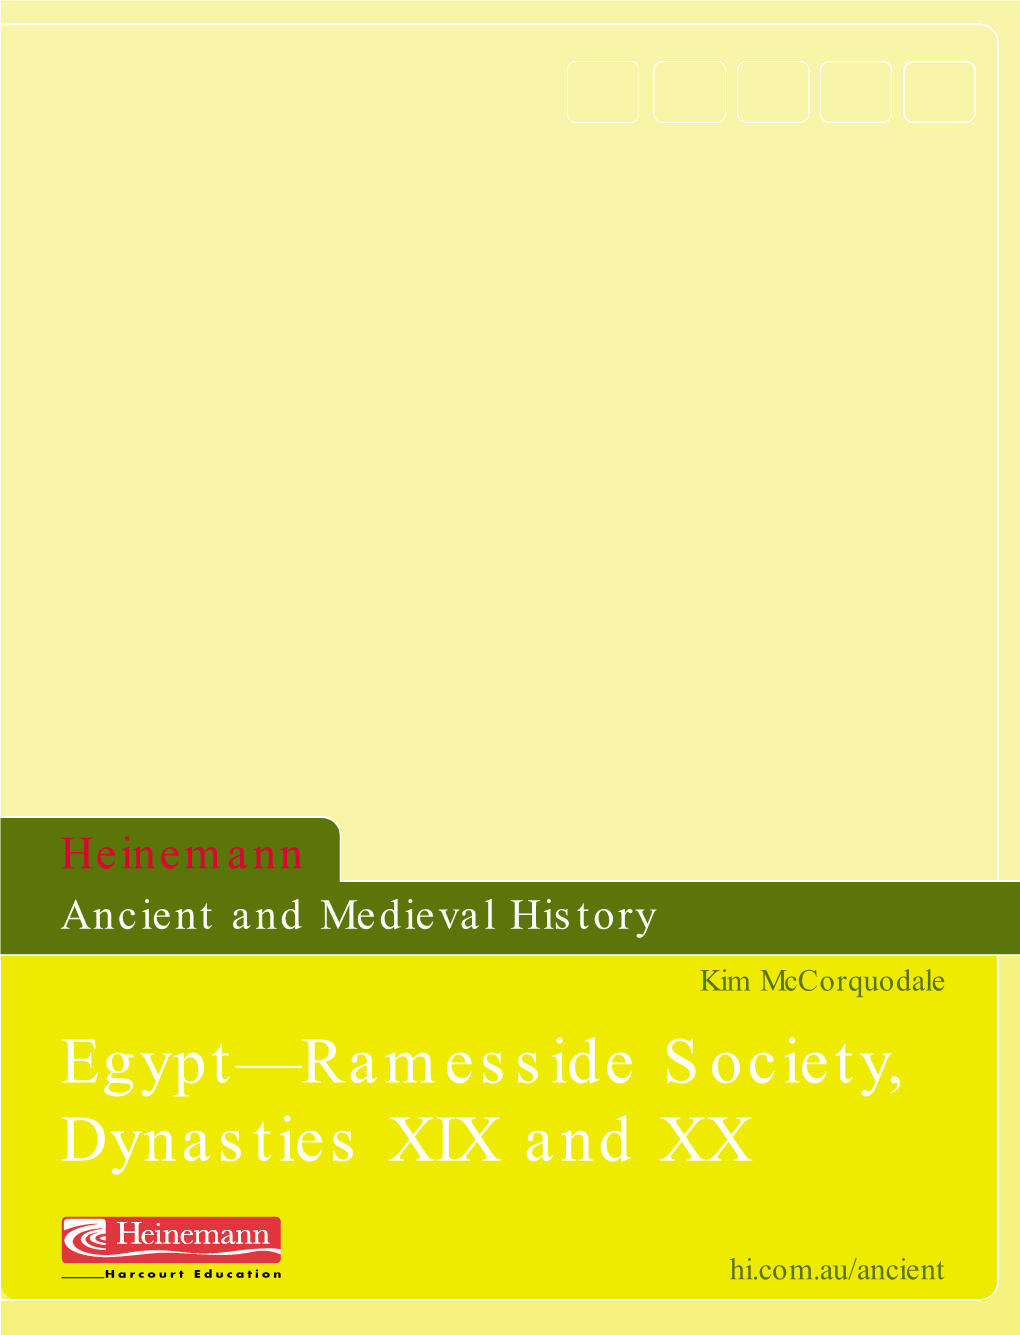 Egypt—Ramesside Society, Dynasties XIX and XX